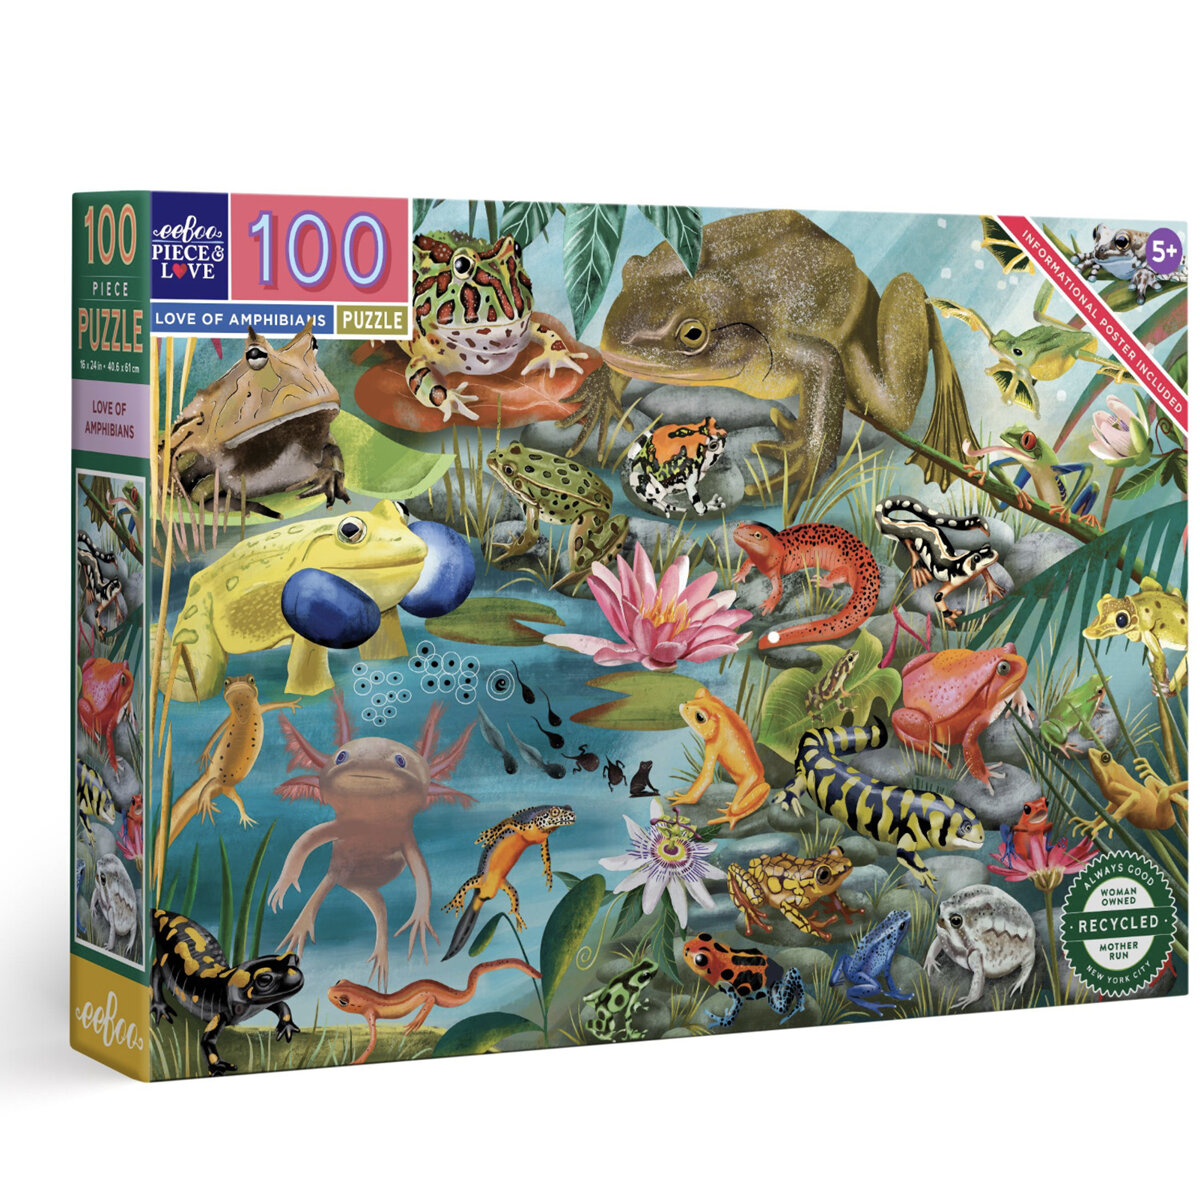 EeBoo Love of Amphibians 100 Piece Puzzle *NEW!*